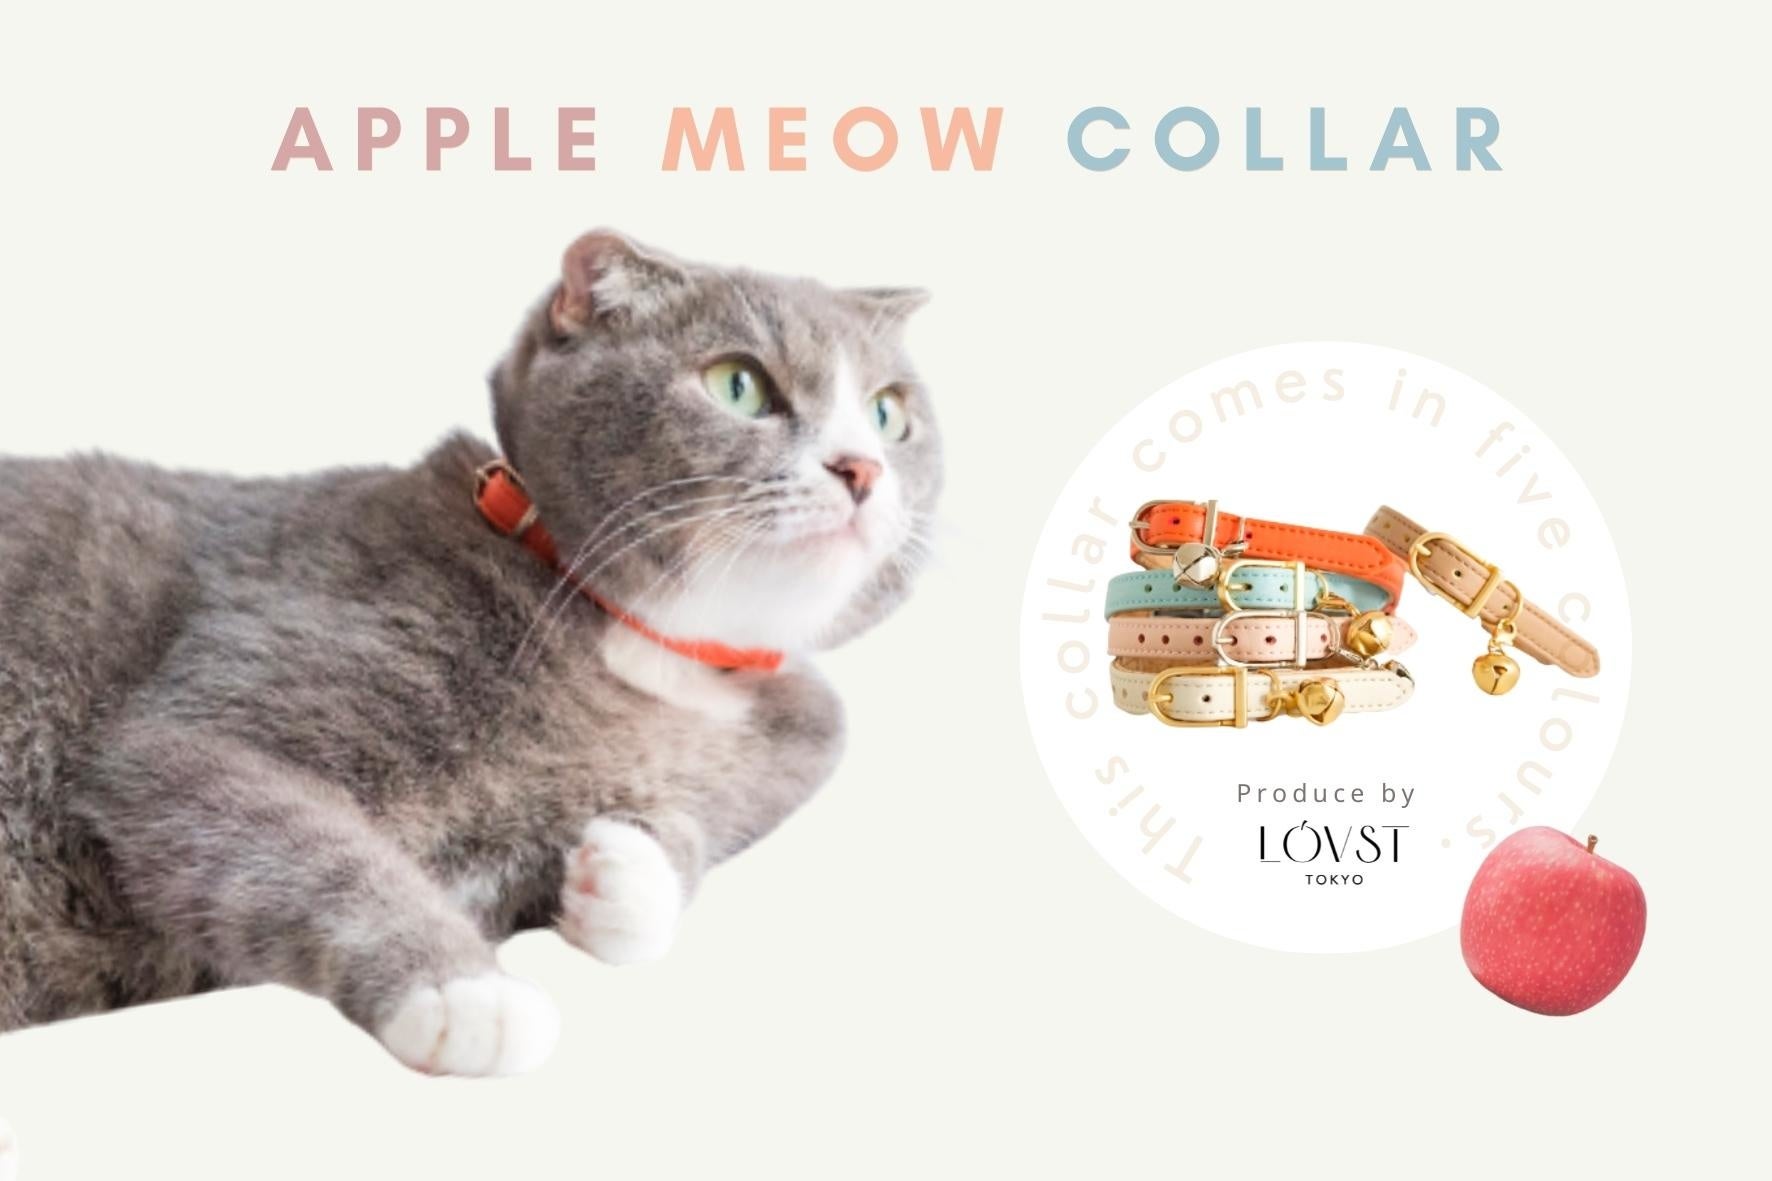 【LOVST TOKYO】廃棄りんご生まれの「アップルレザー」を用いた猫の首輪「Apple Meow Collar」をMakuakeにて販売！ 新製品の試飲会イベントの開催も